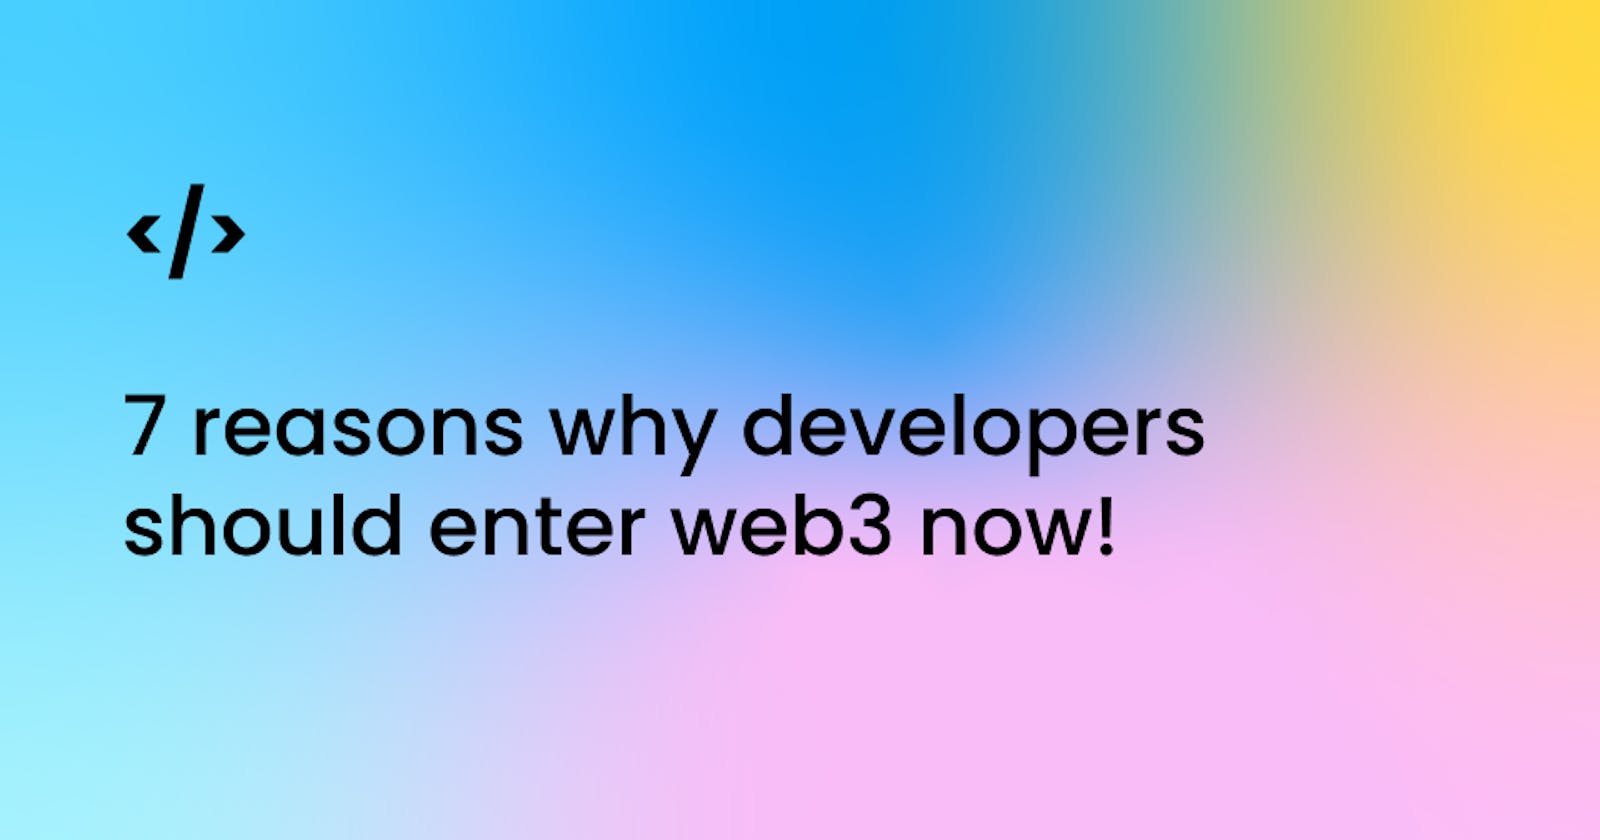 7 reasons why devs should enter web3 now